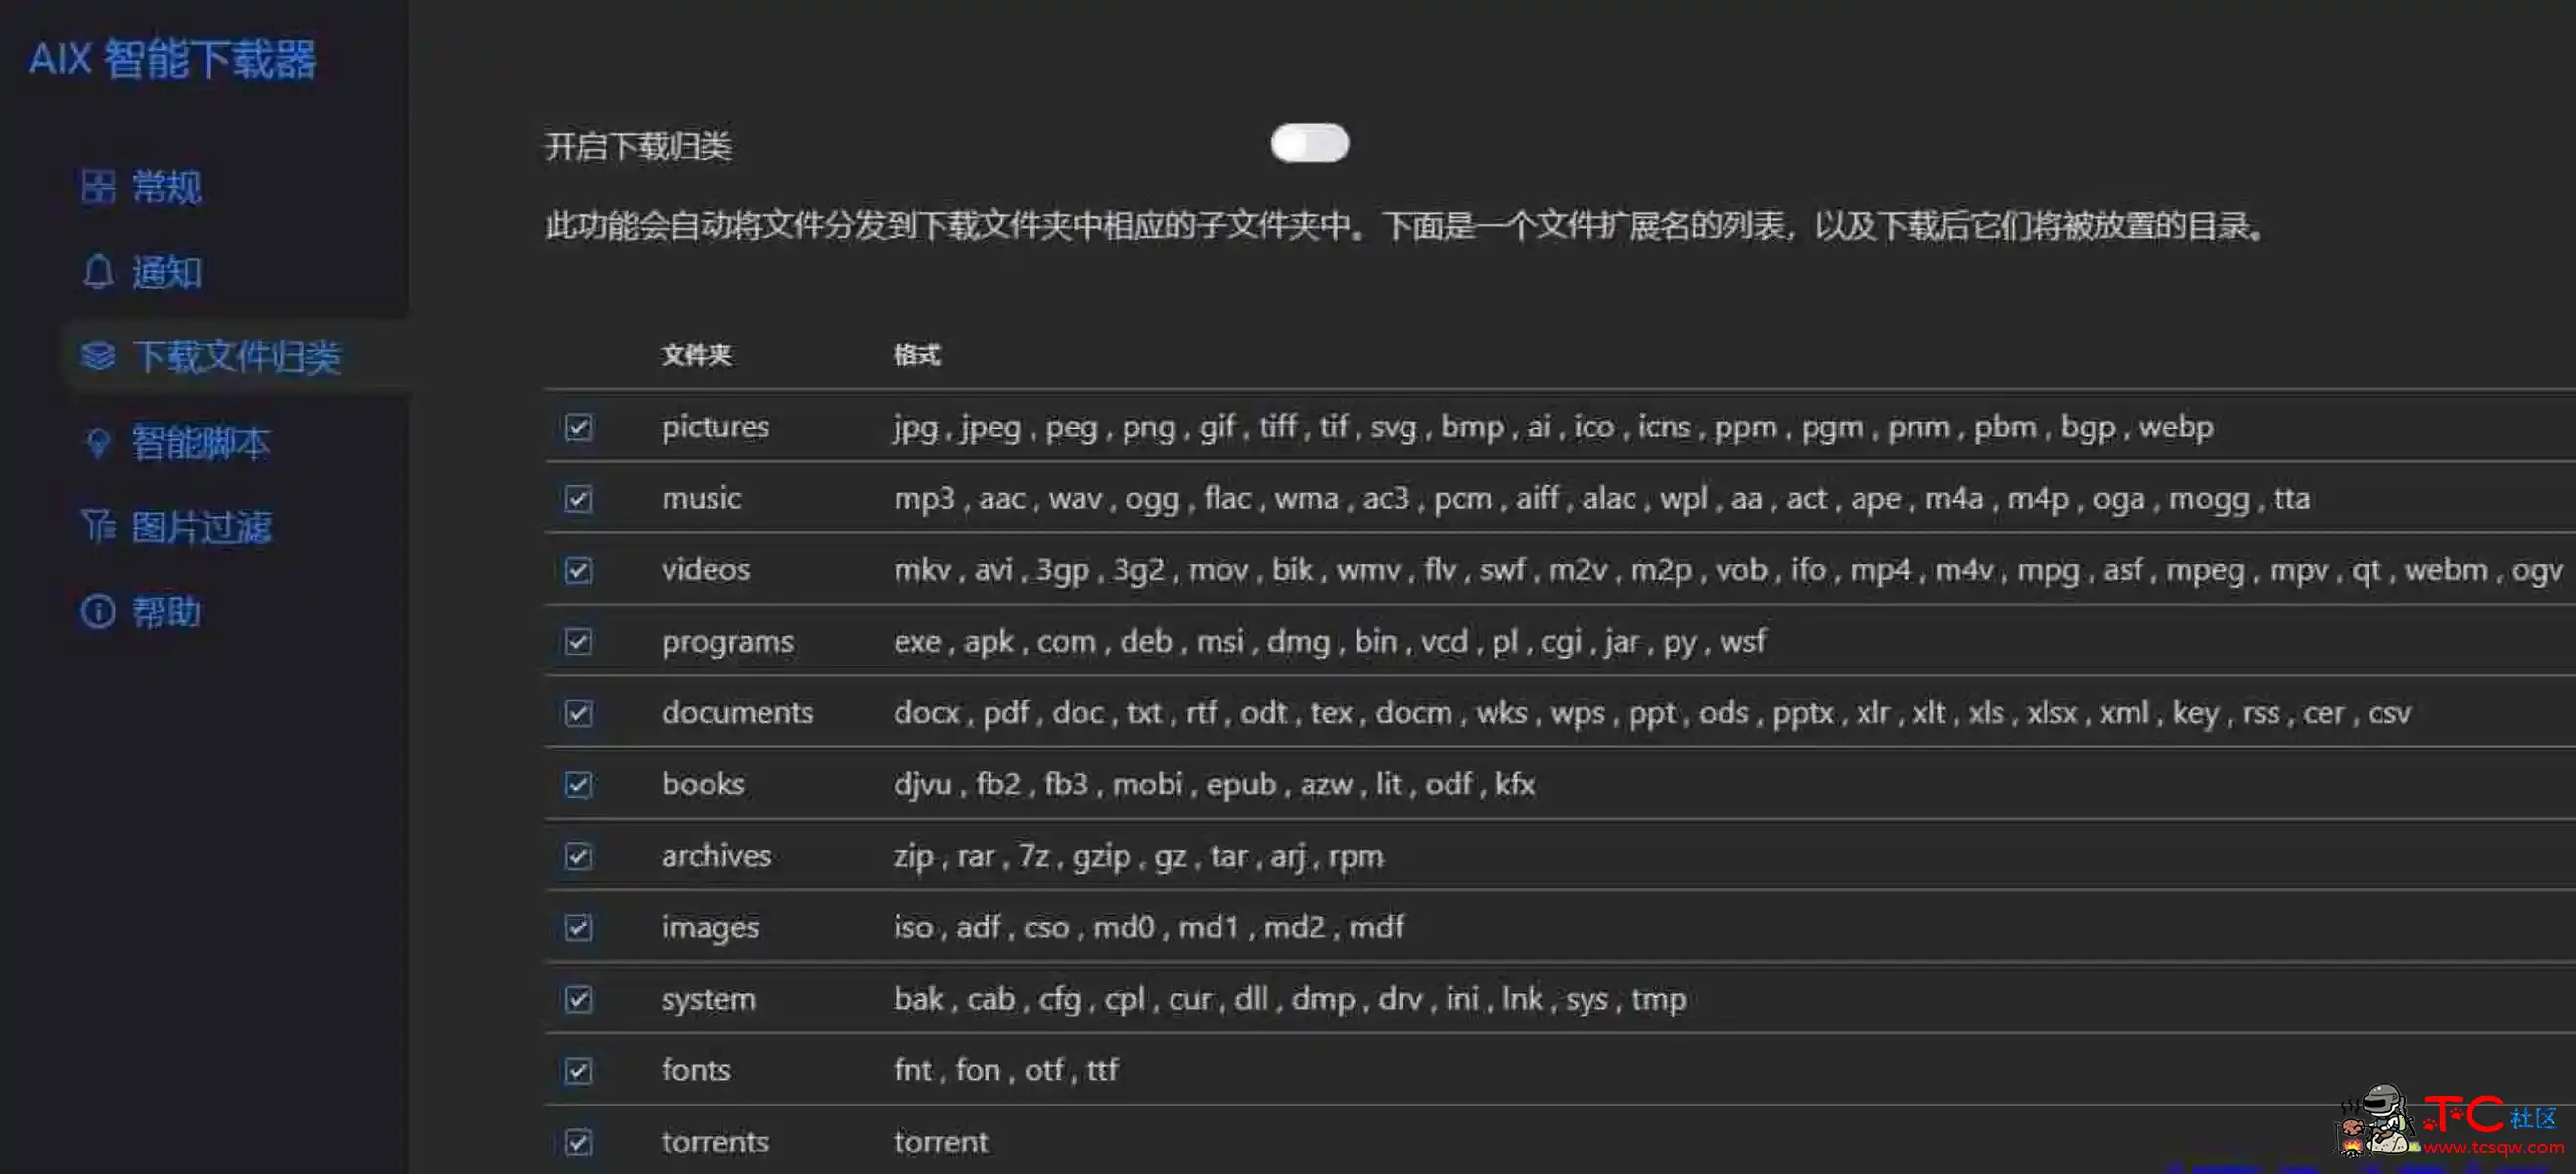 AIX网页嗅探插件可批量下载图片视频音频文档 屠城辅助网www.tcfz1.com9254